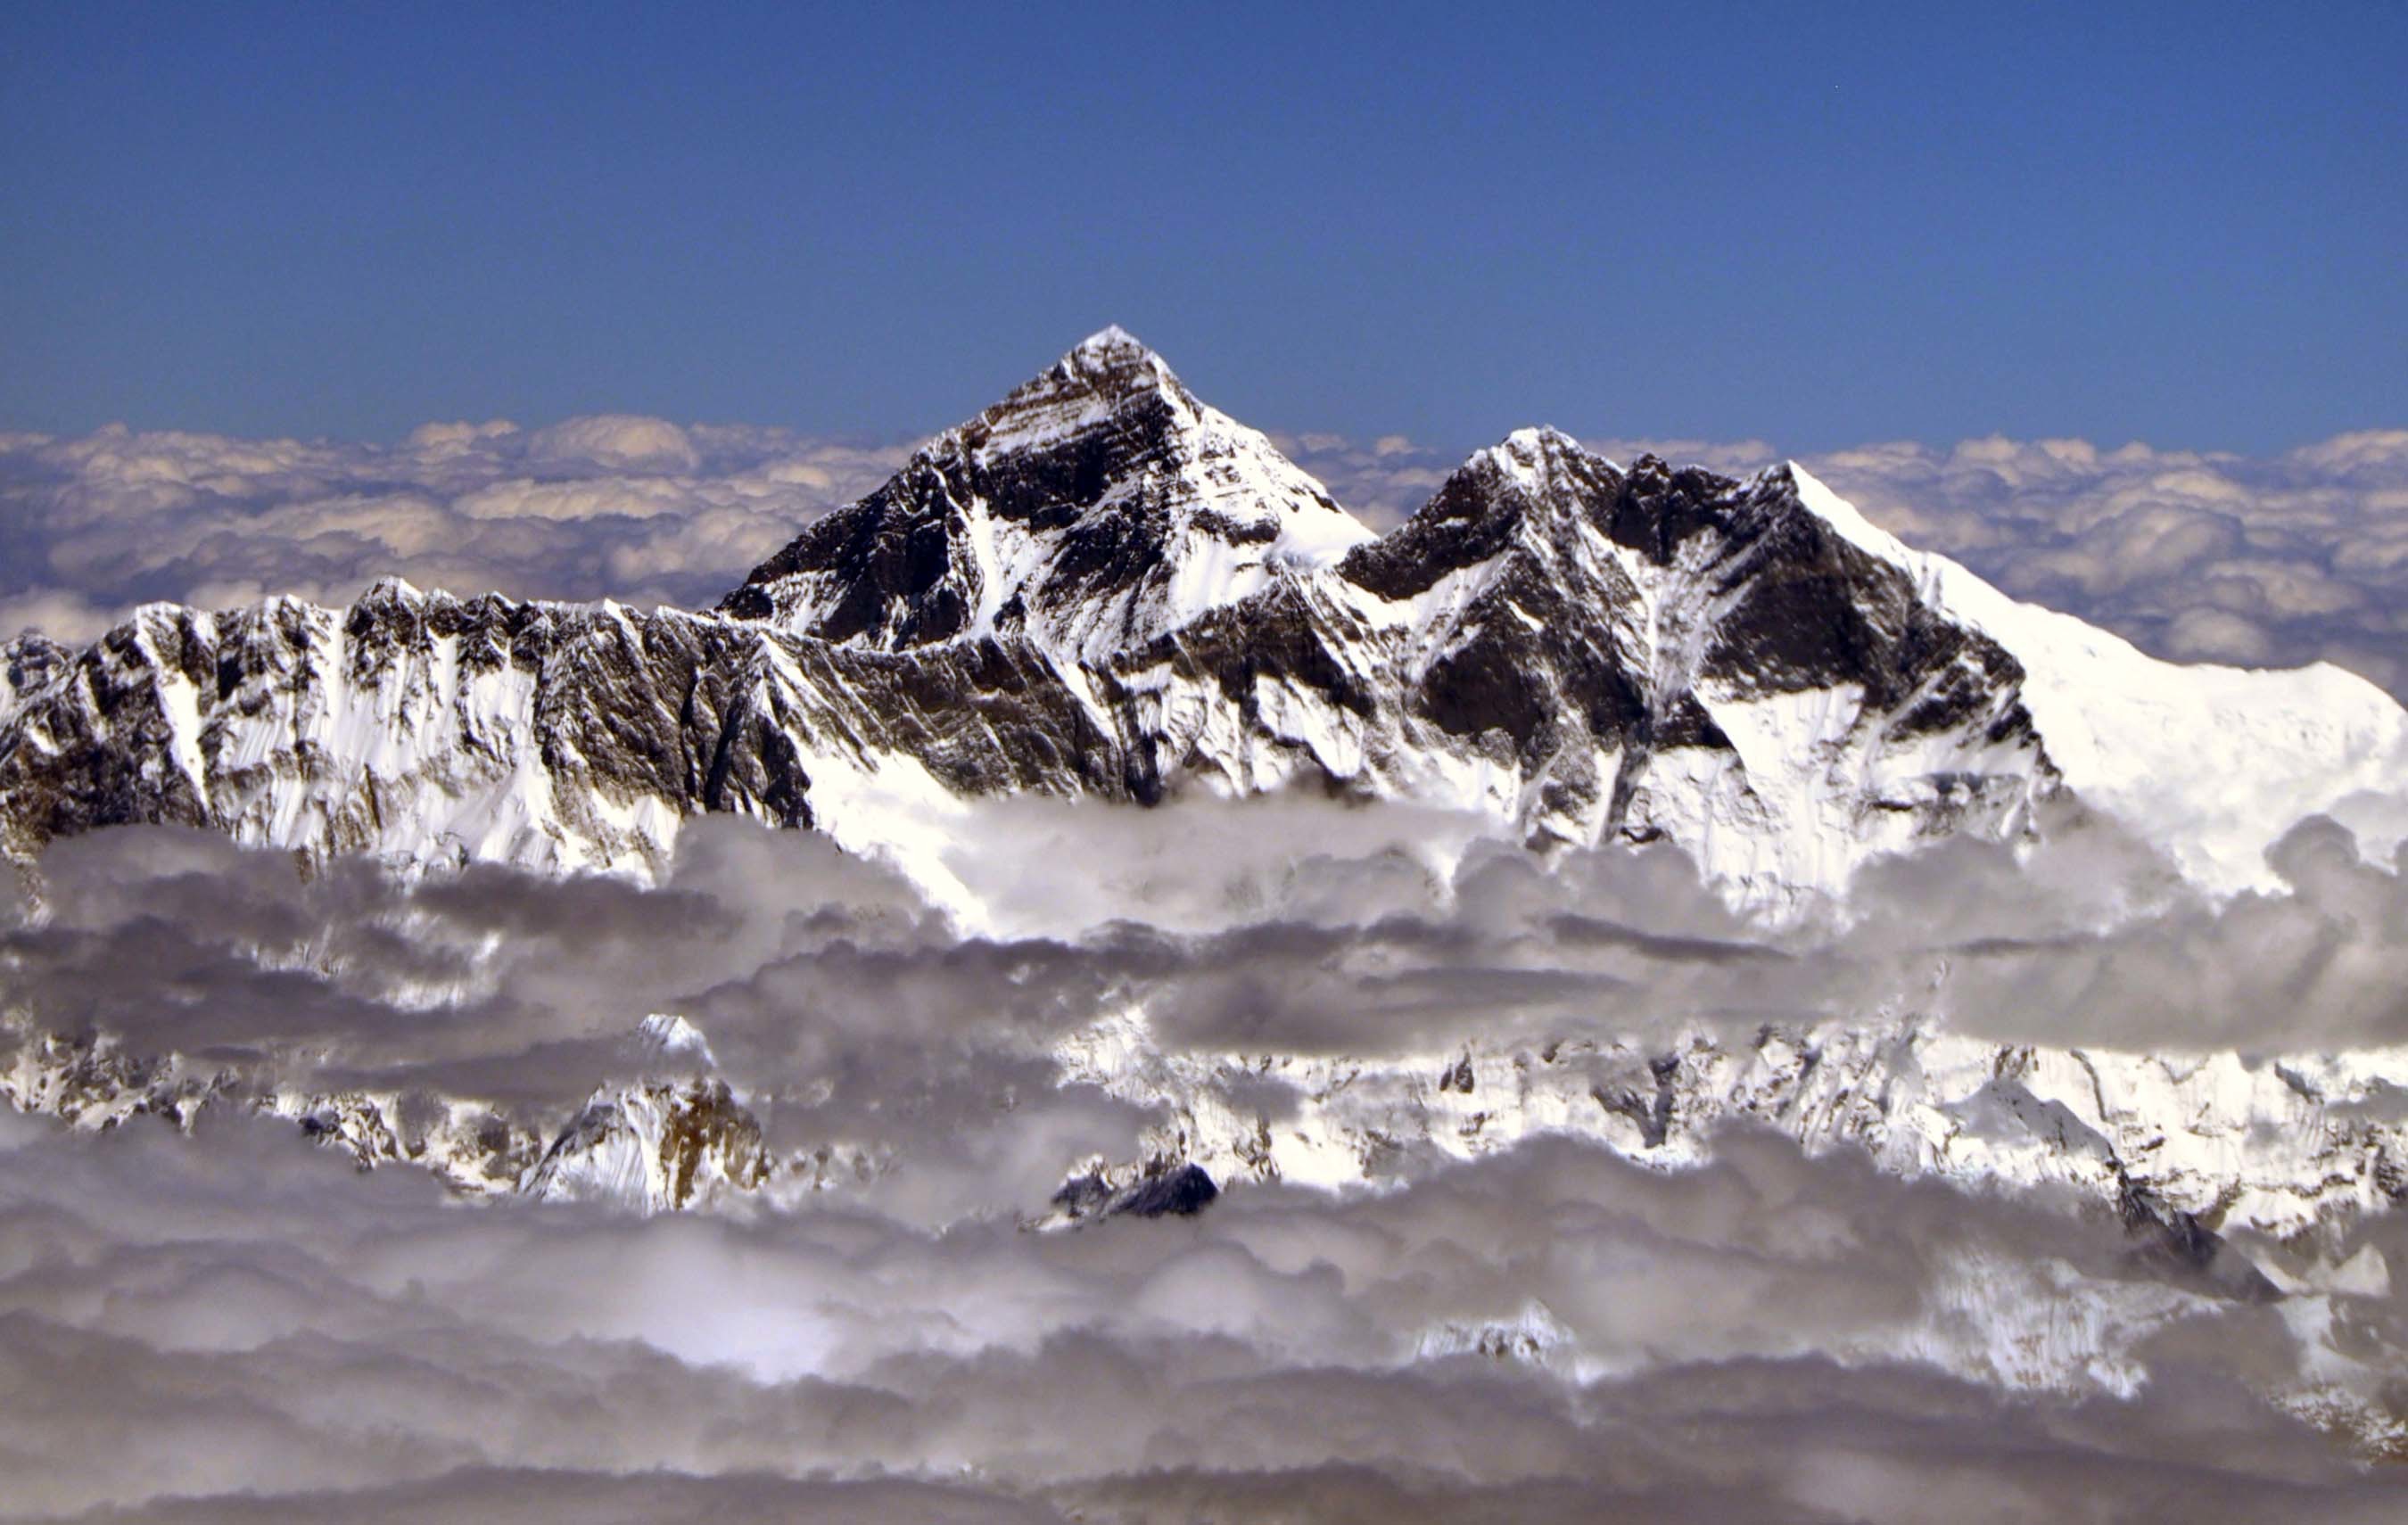 Mount Everest Spectacular Wallpapers Full HD 4K